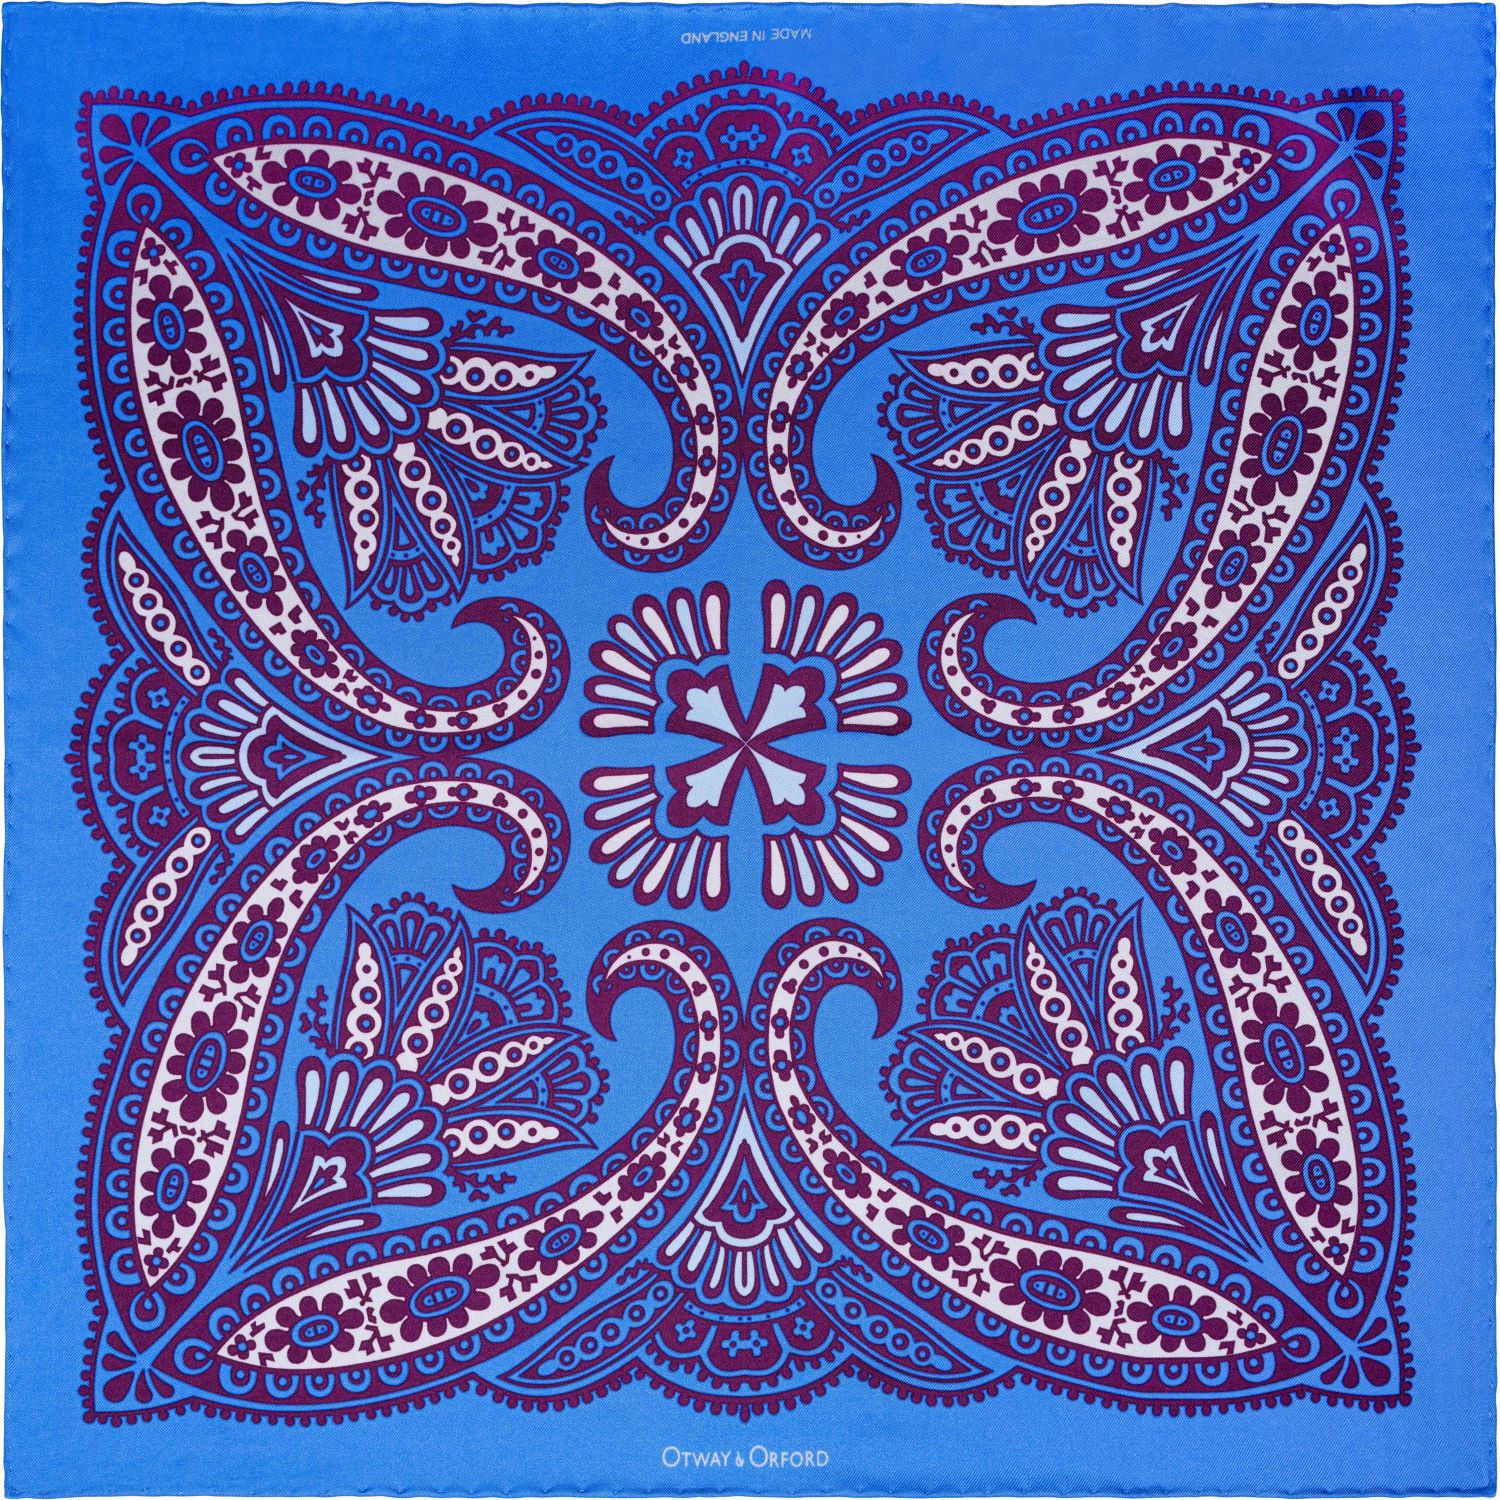 Men’s ’Kaleidoscope’ Paisley Silk Pocket Square In Blue, Burgundy & Cream. Full-Size. Otway & Orford